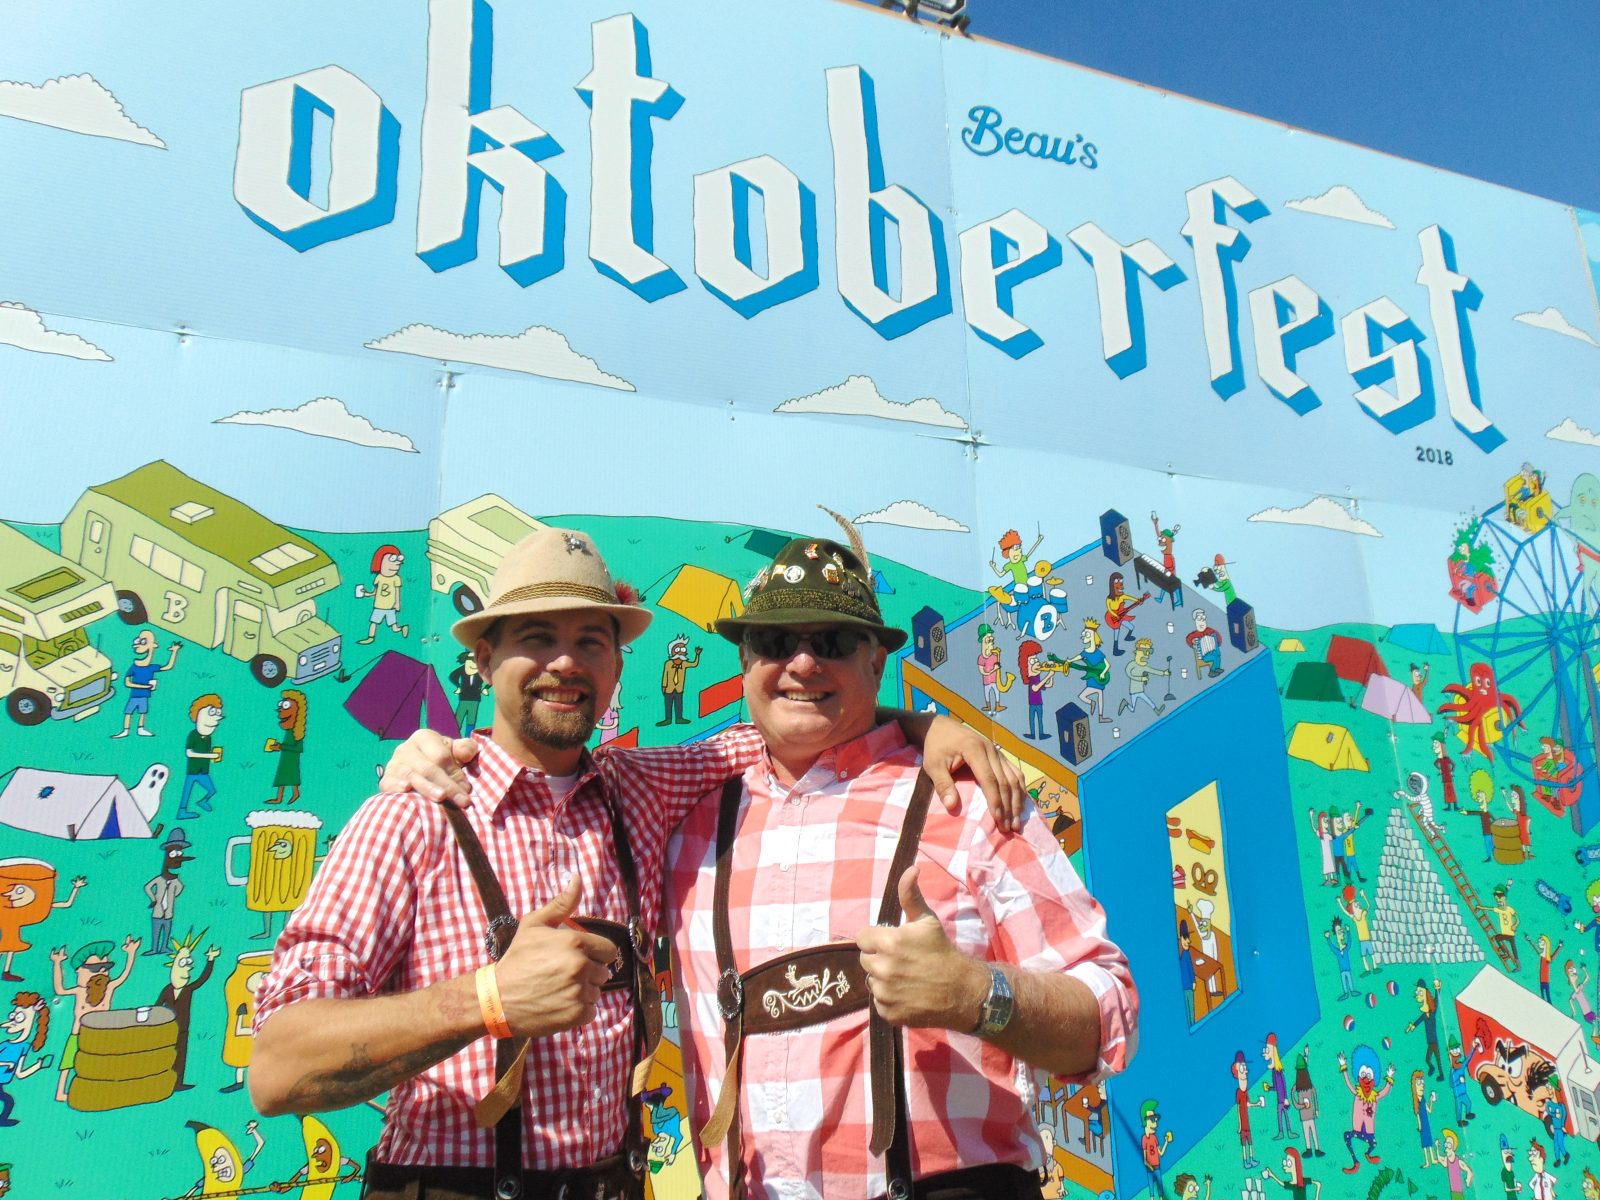 Oktoberfest cancelled this year